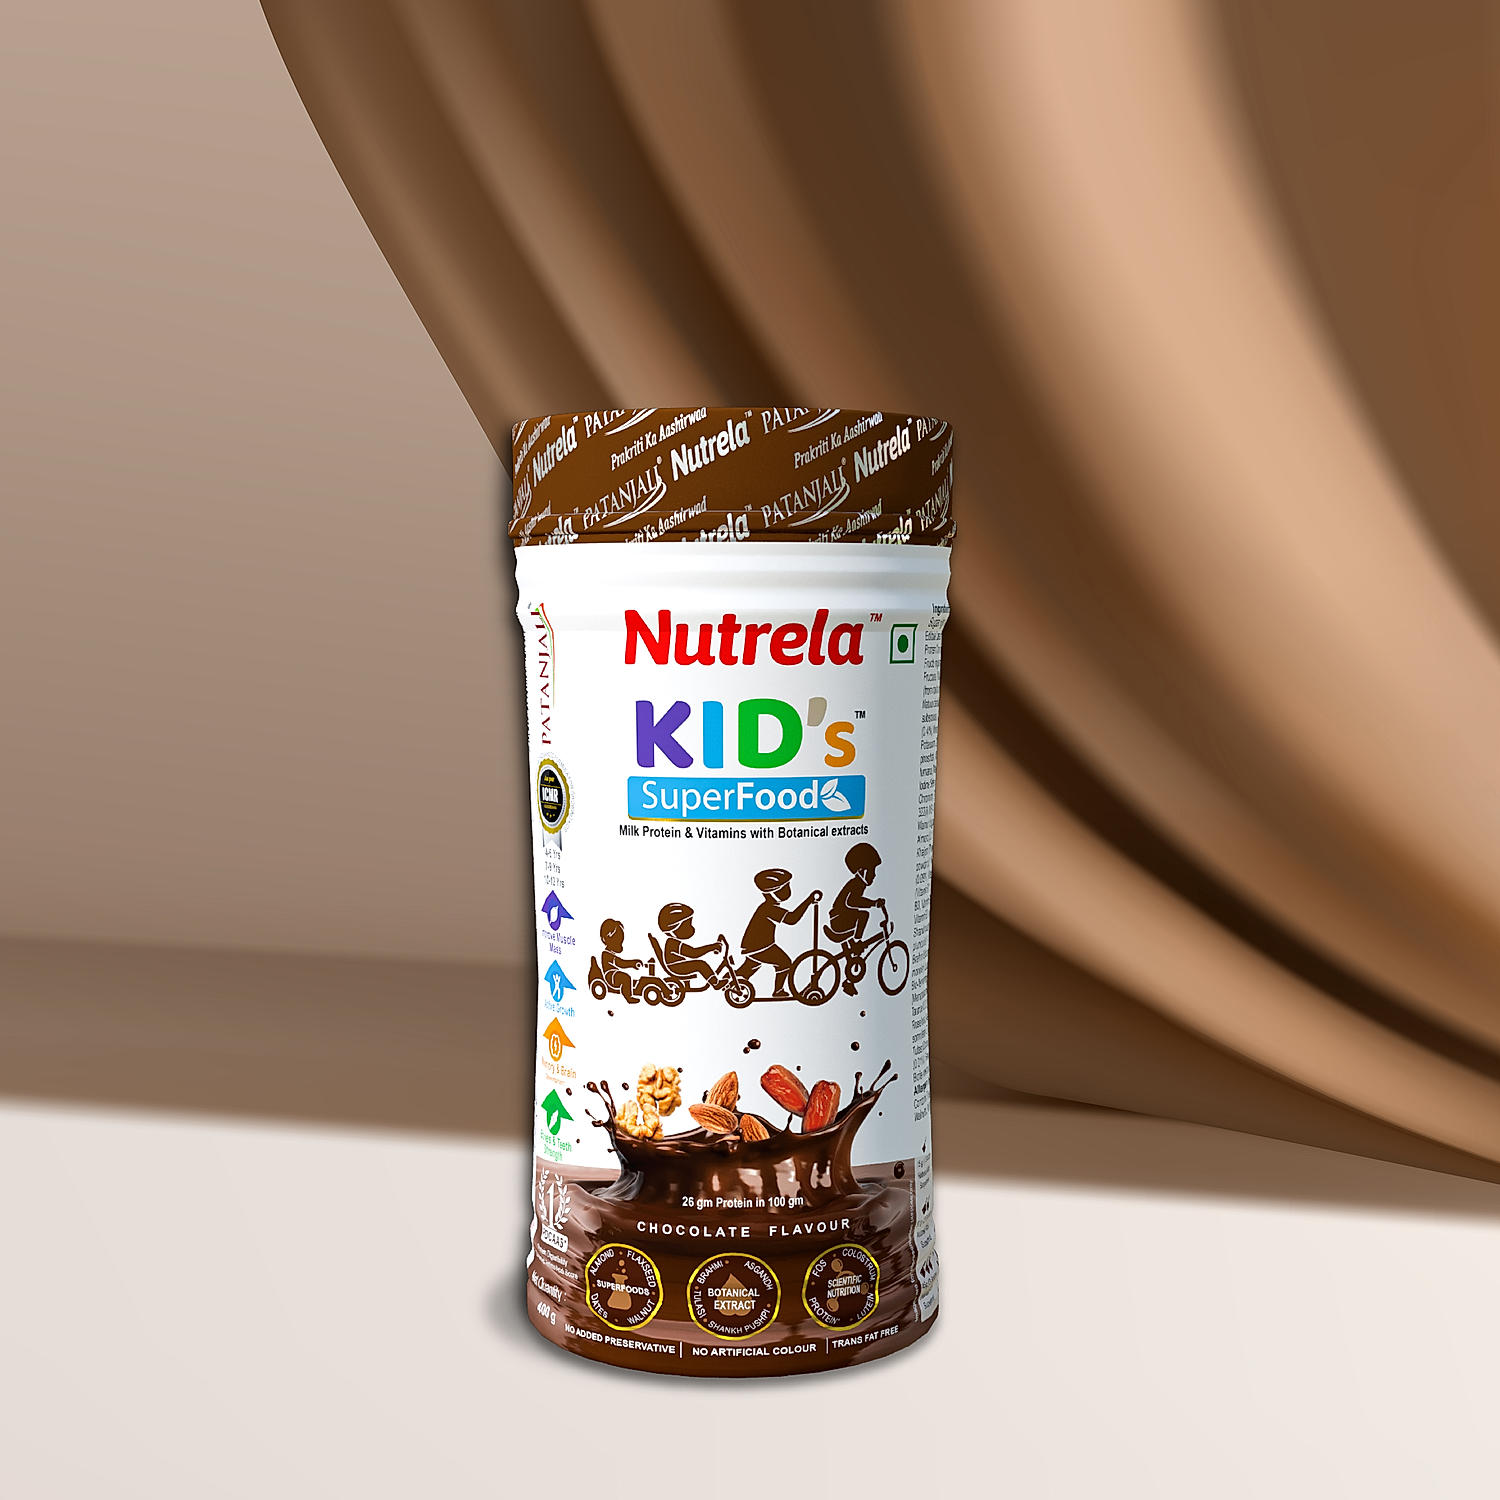 Patanjali Nutrela Kids Superfood (Pack of 1)